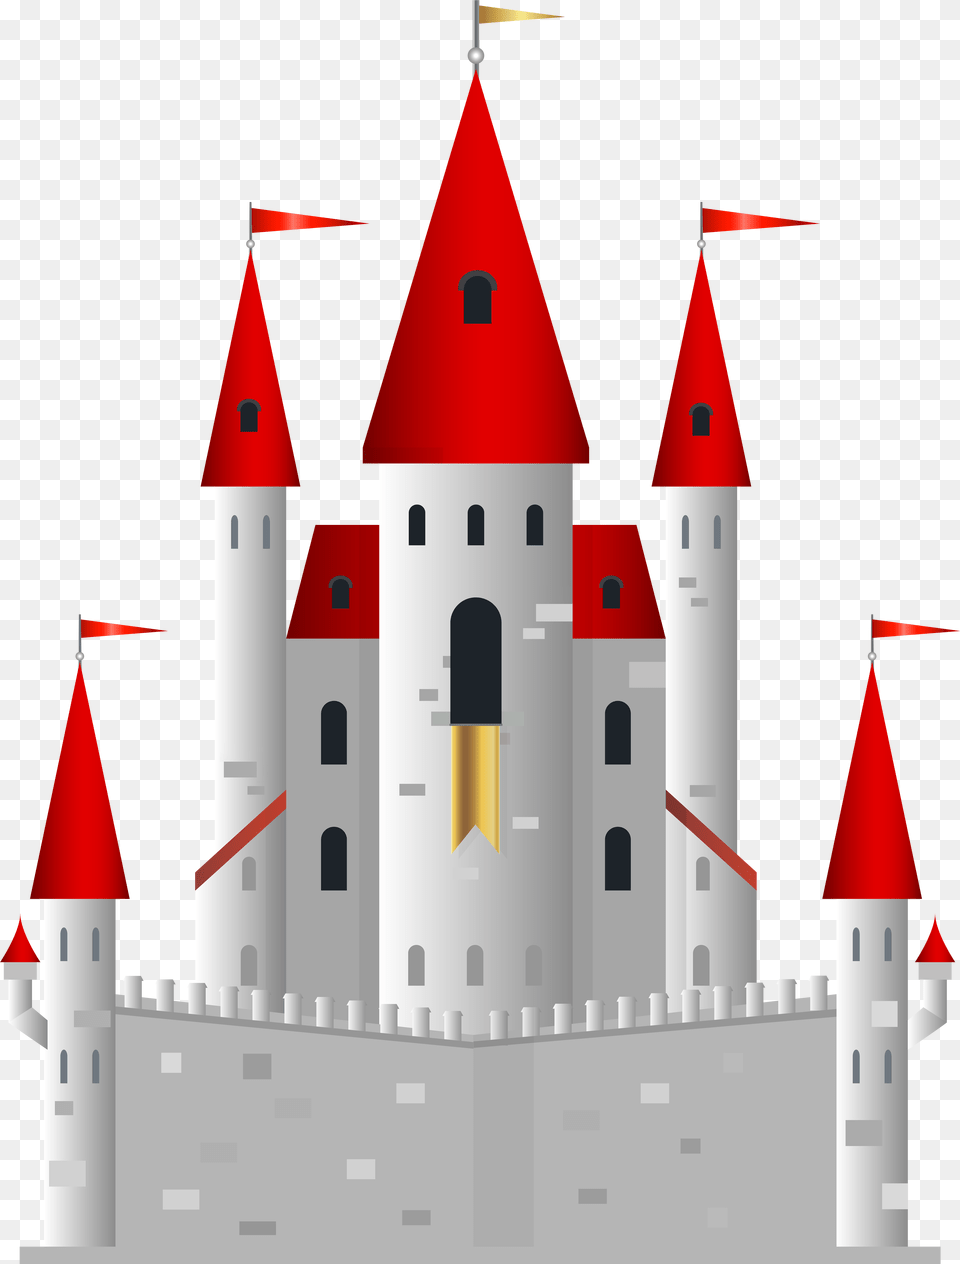 Fairytale Castle Clip Art Download, Architecture, Building, Spire, Tower Png Image